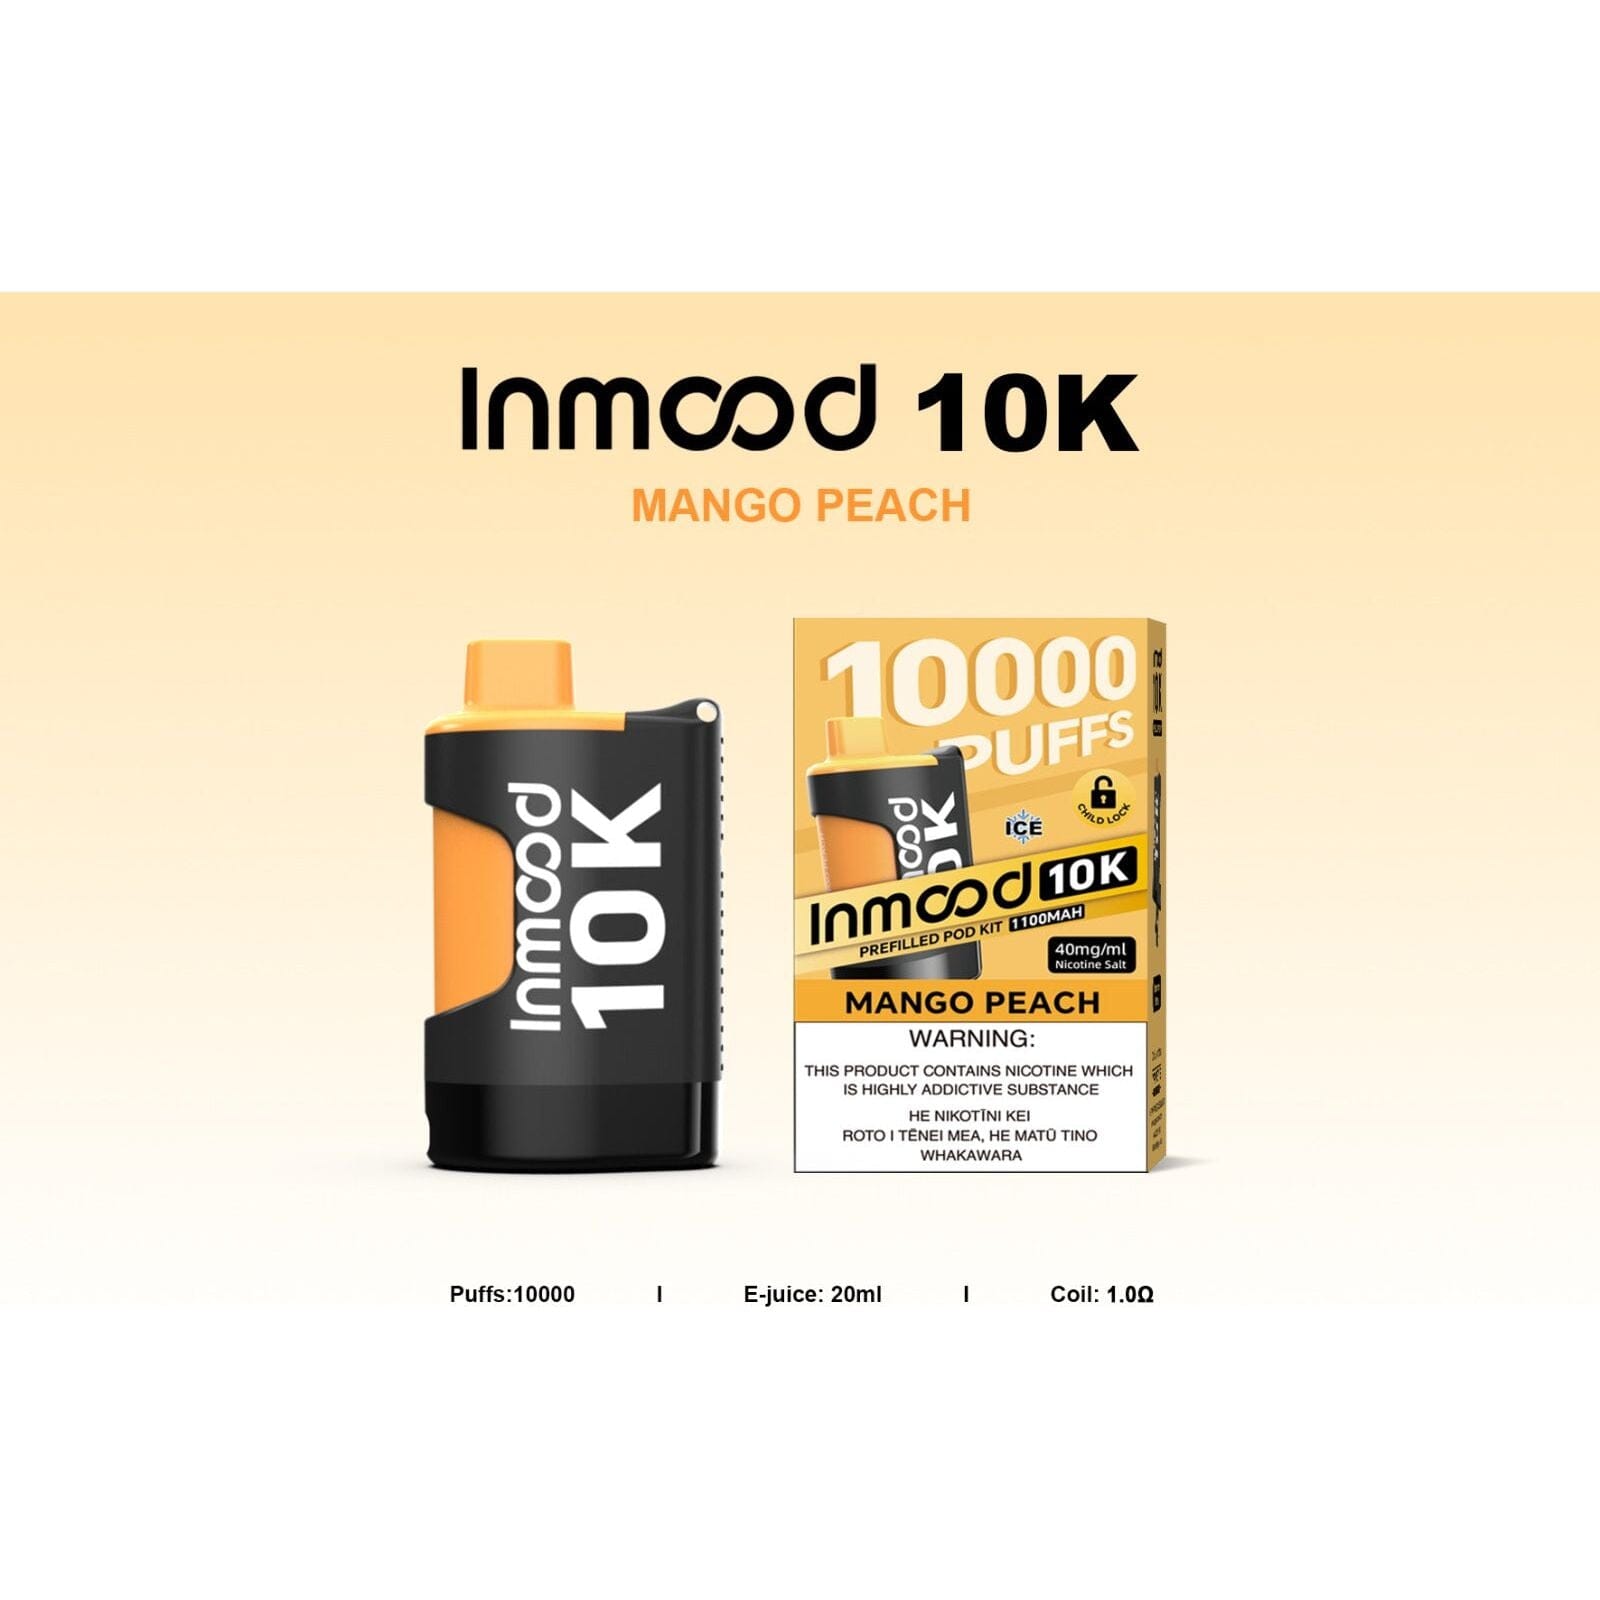 Inmood 10K Prefilled Pod Kit - Mango Peach - Vapoureyes